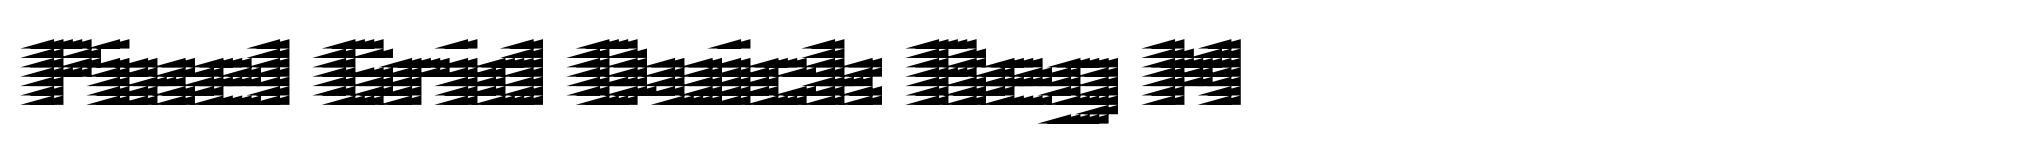 Pixel Grid Quick Reg M image